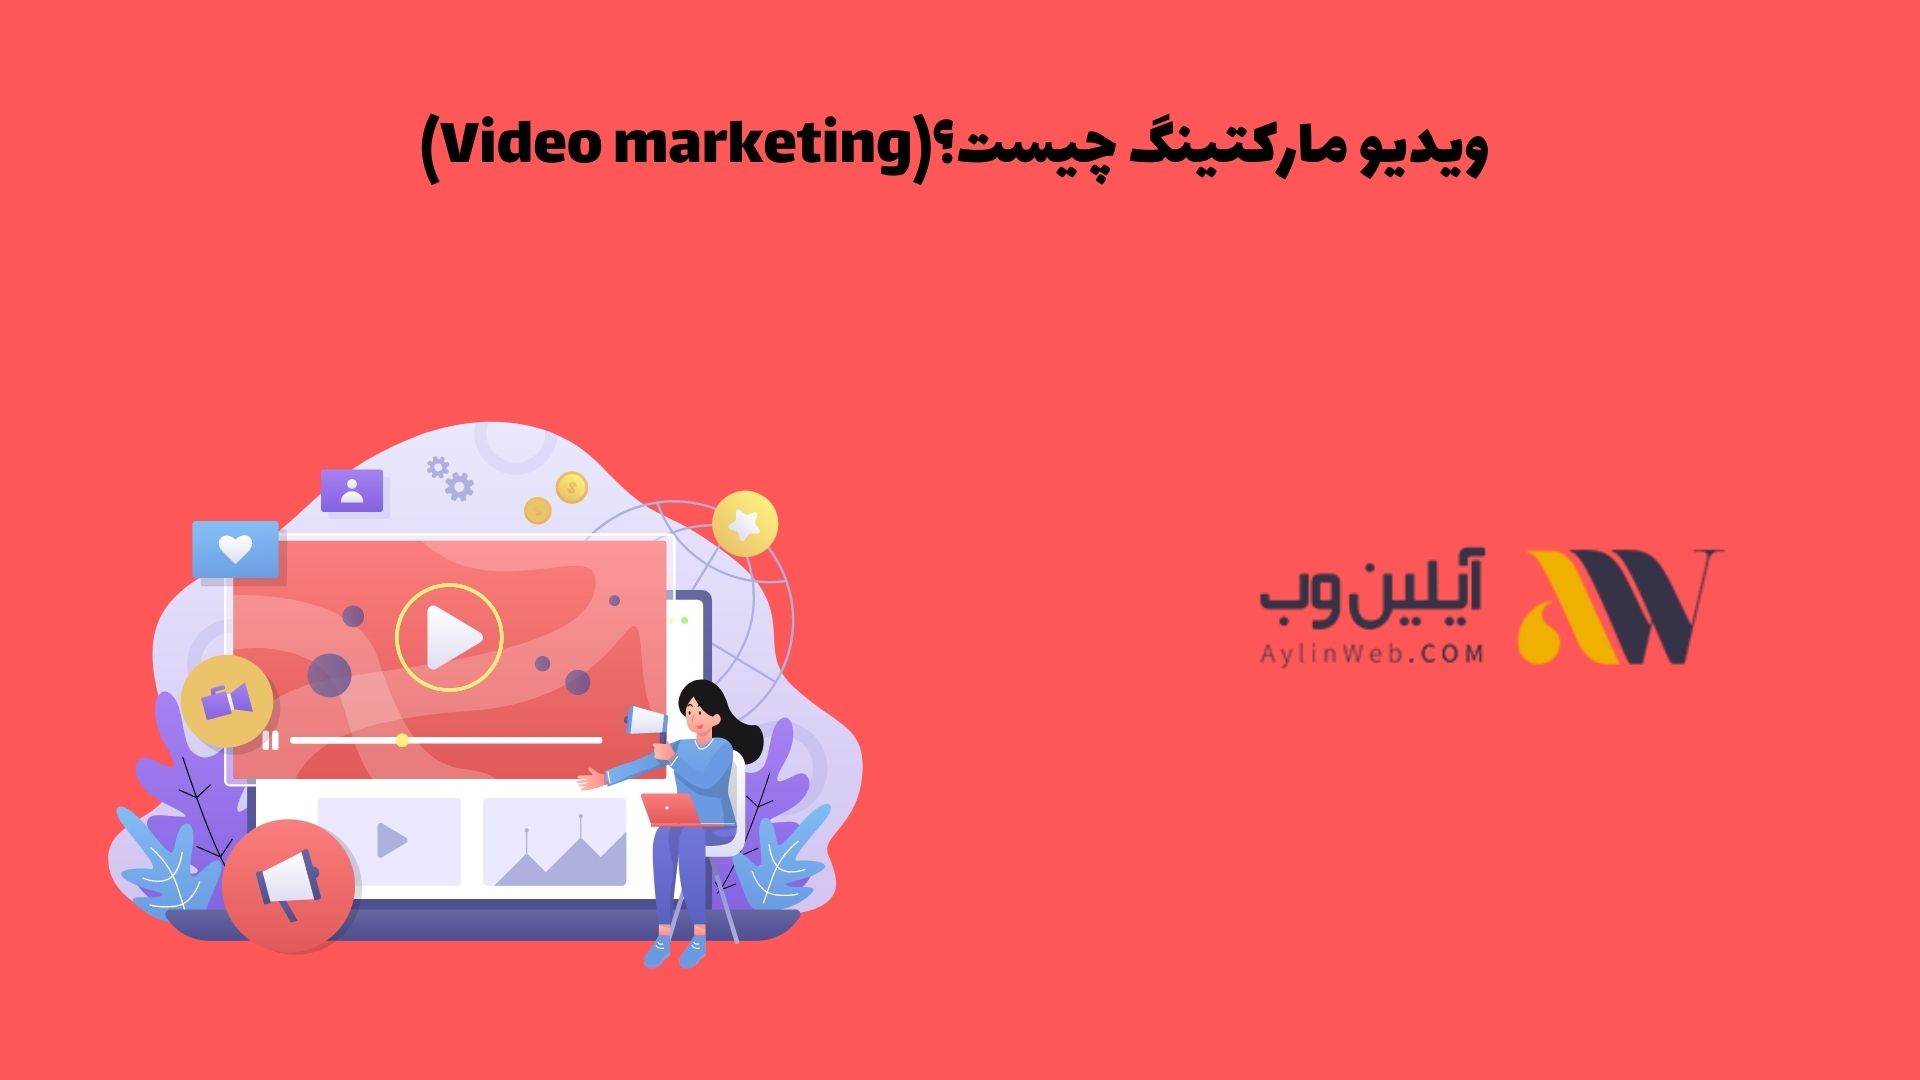 (Video marketingویدیو مارکتینگ چیست؟)